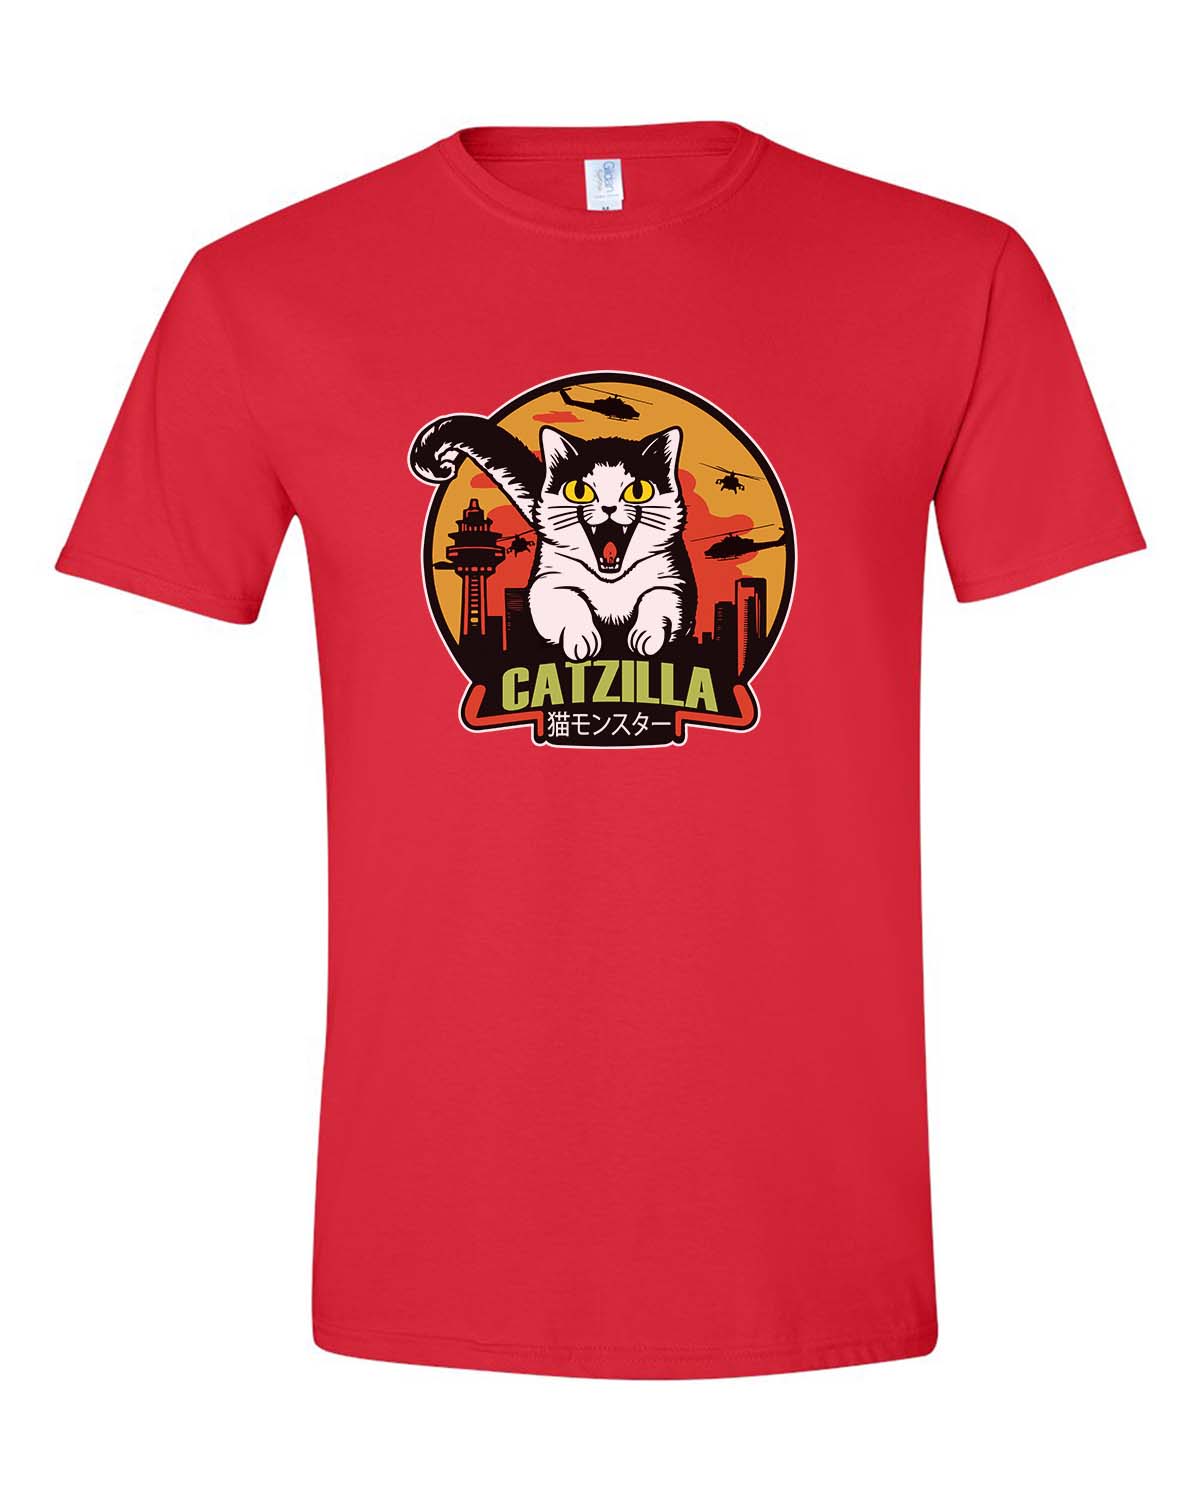 Catzilla Attacks - Unisex T-Shirt